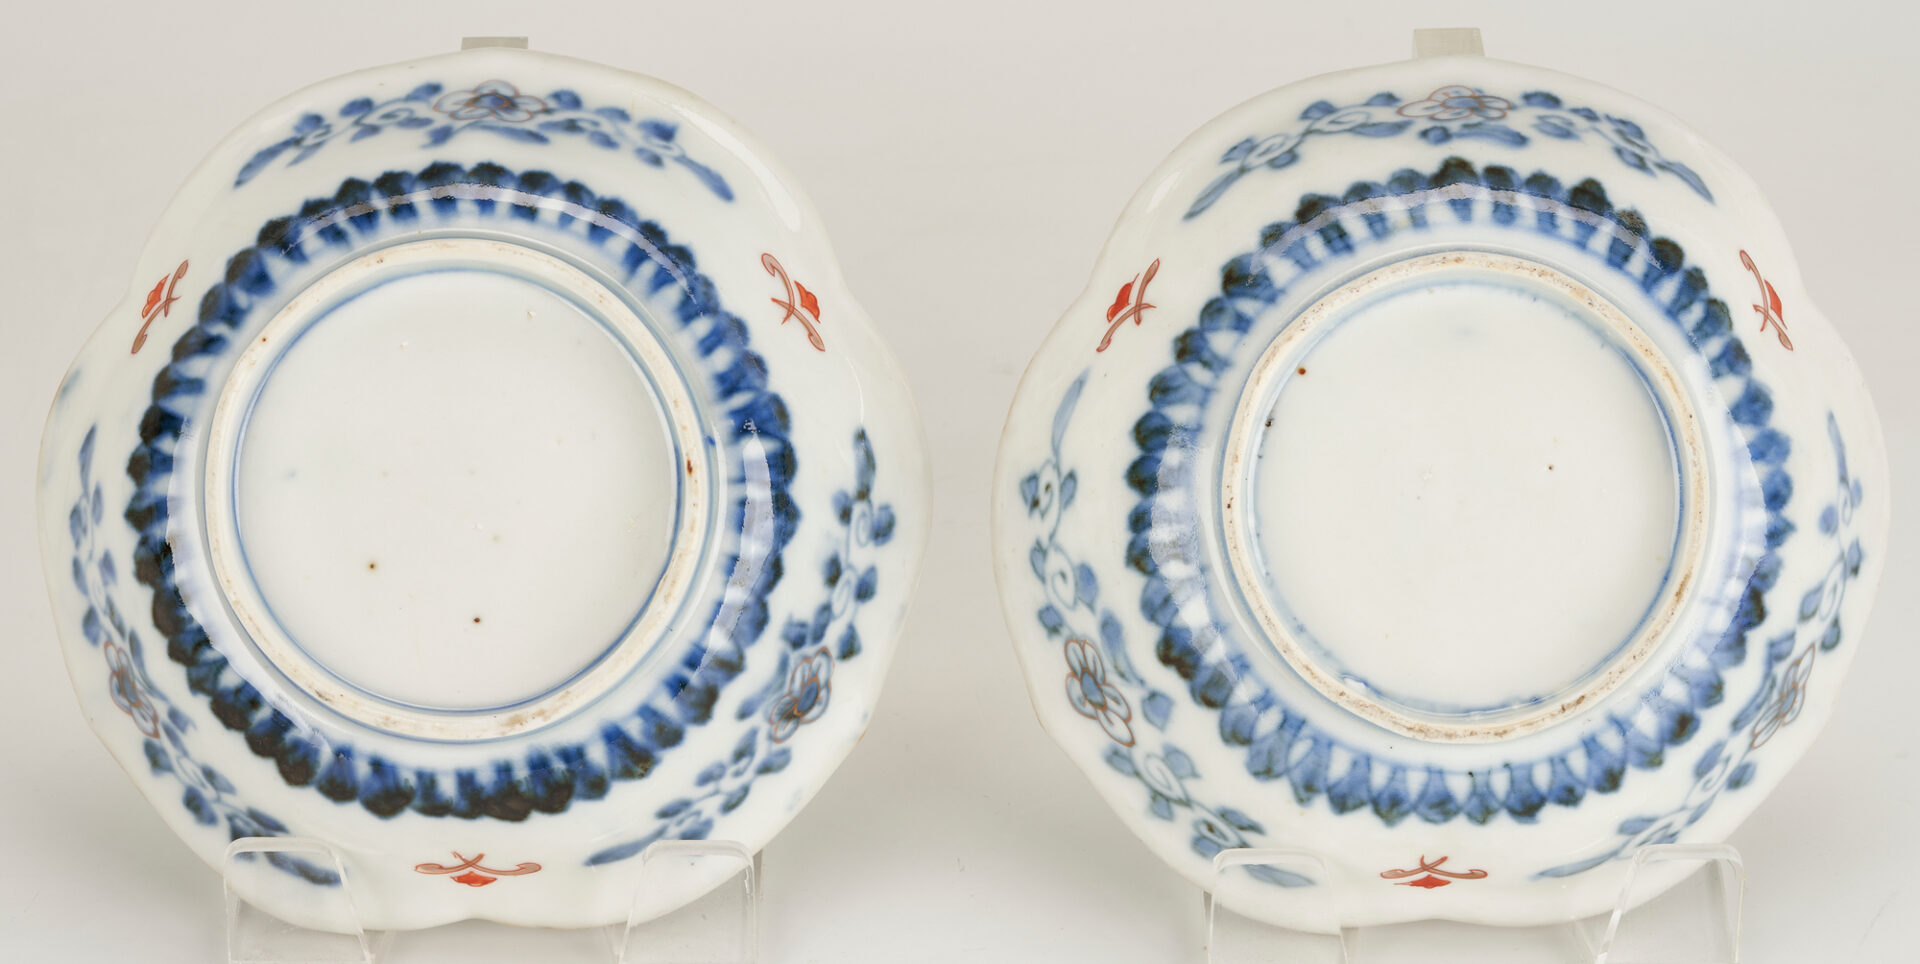 Lot 896: 5 Japanese Porcelain Items, incl. Satsuma